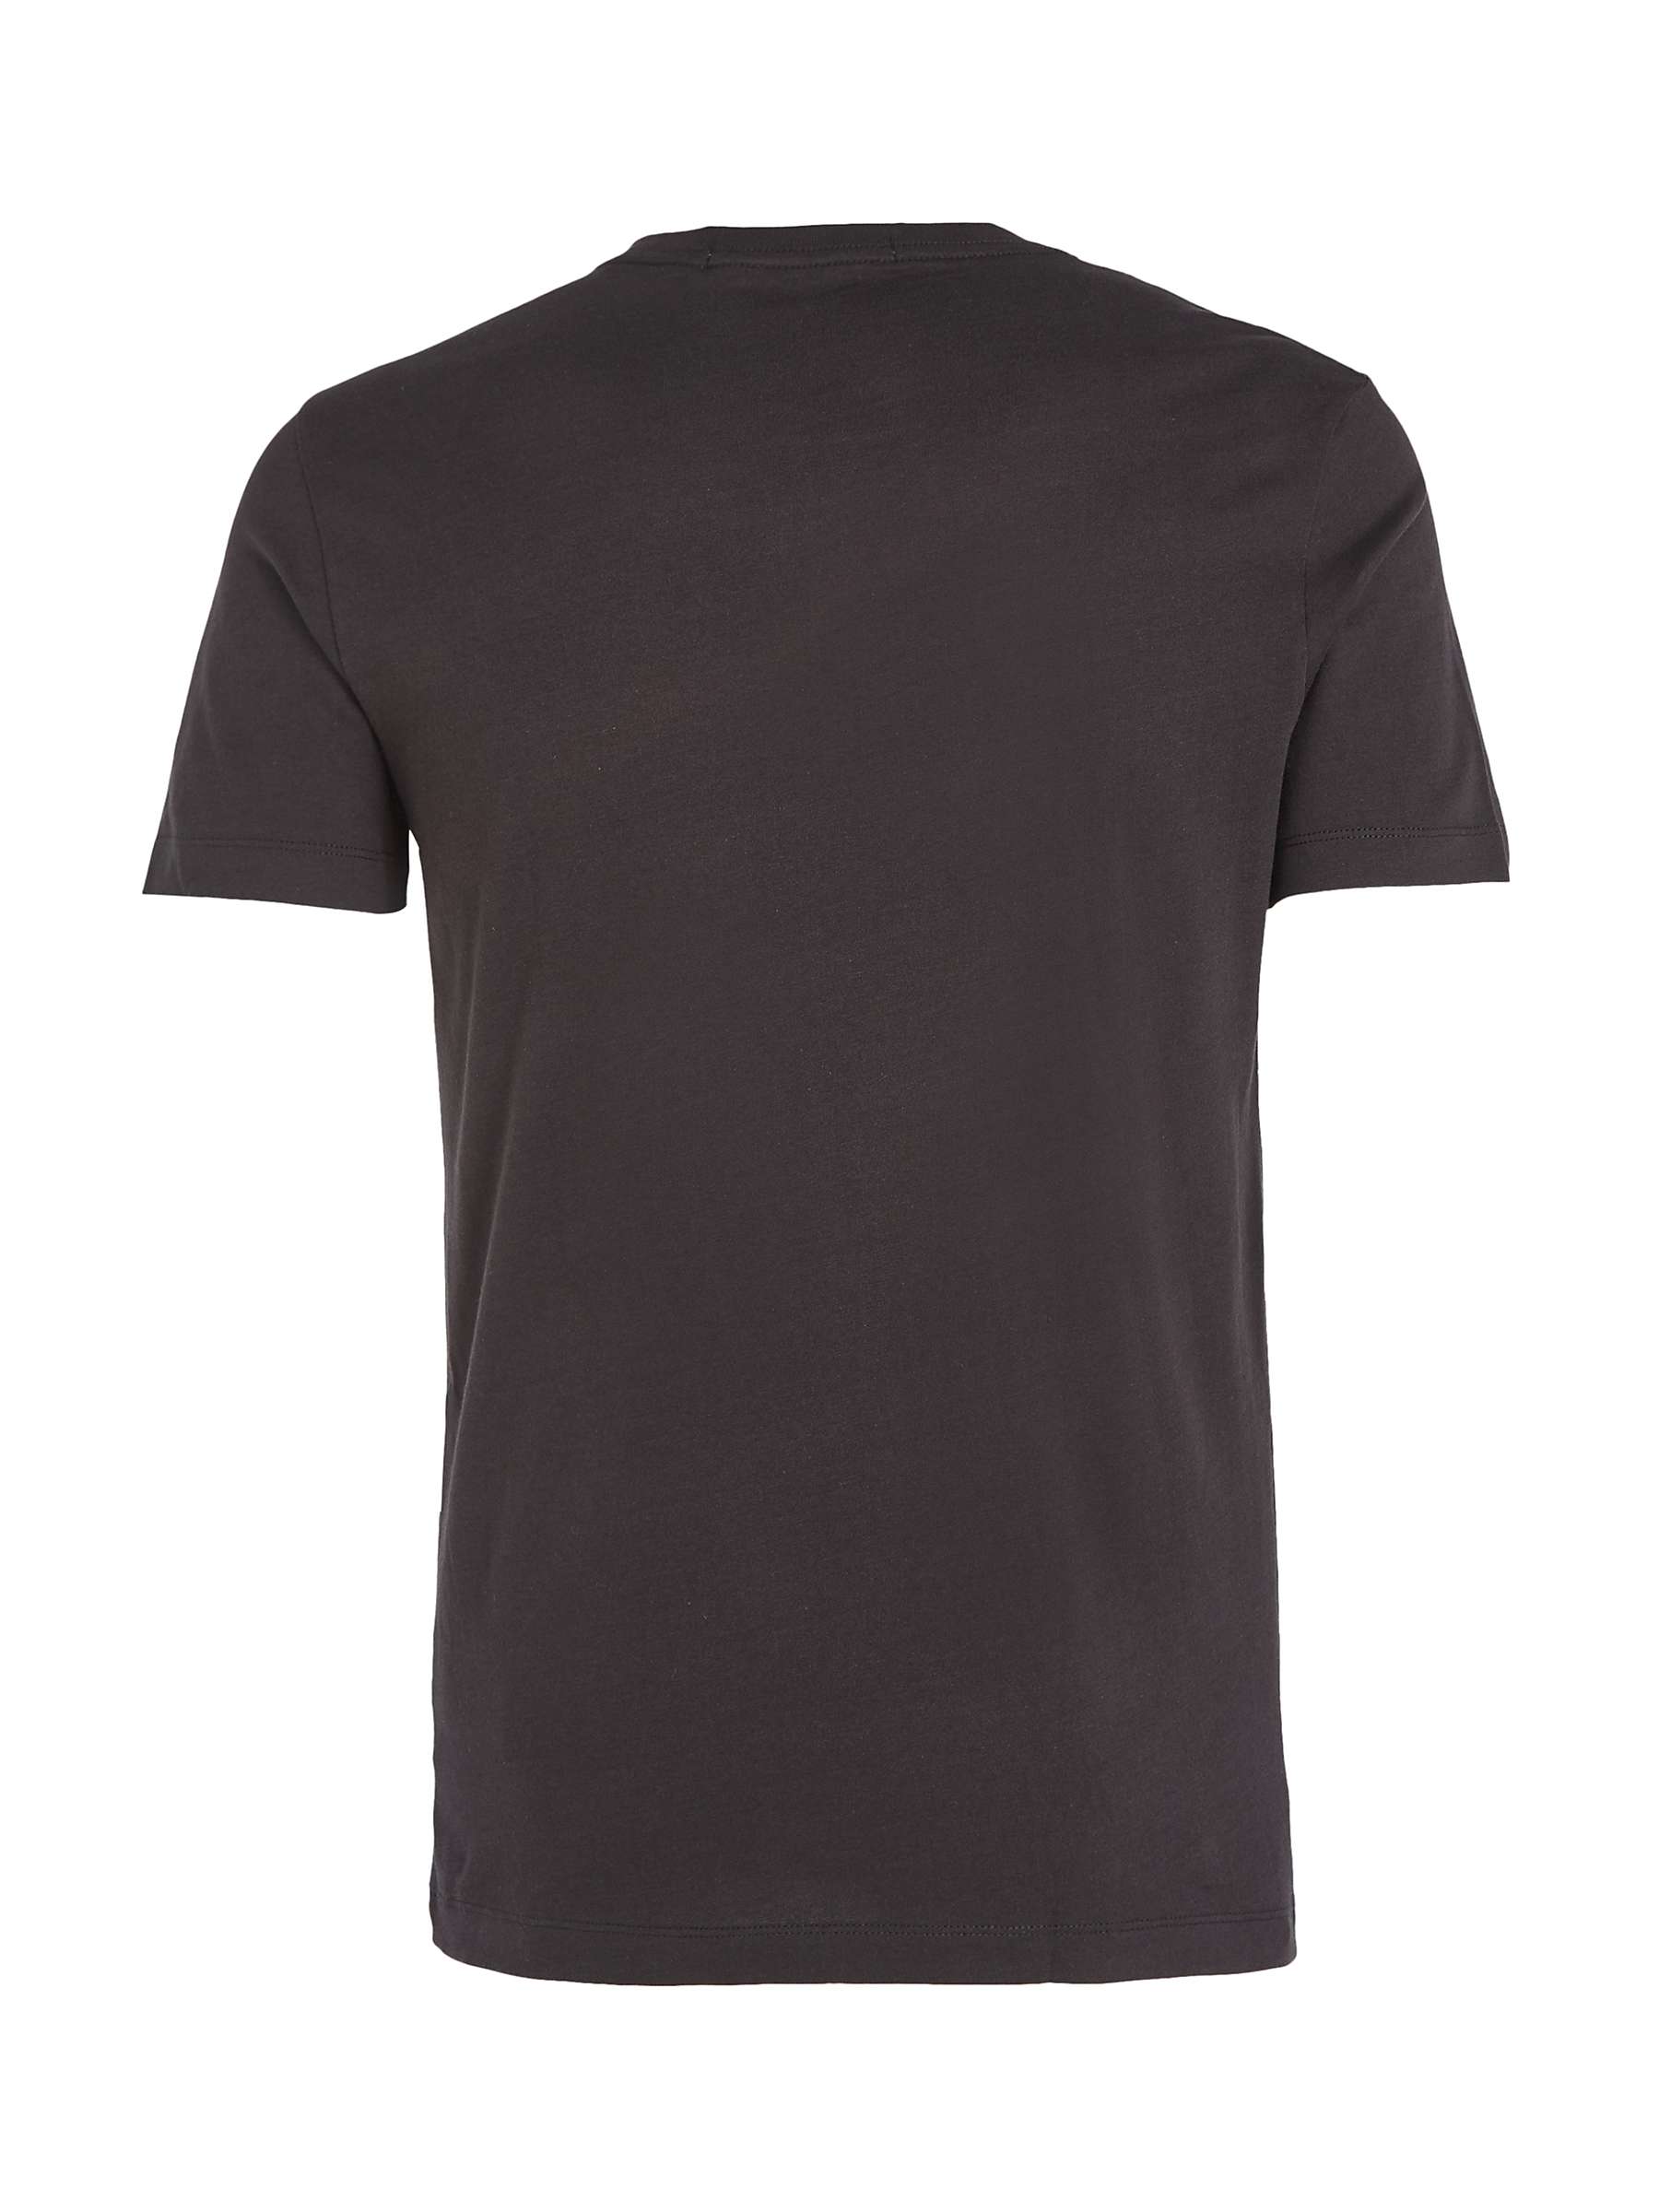 Buy Calvin Klein Jeans Monogram Chest Pocket T-Shirt Online at johnlewis.com